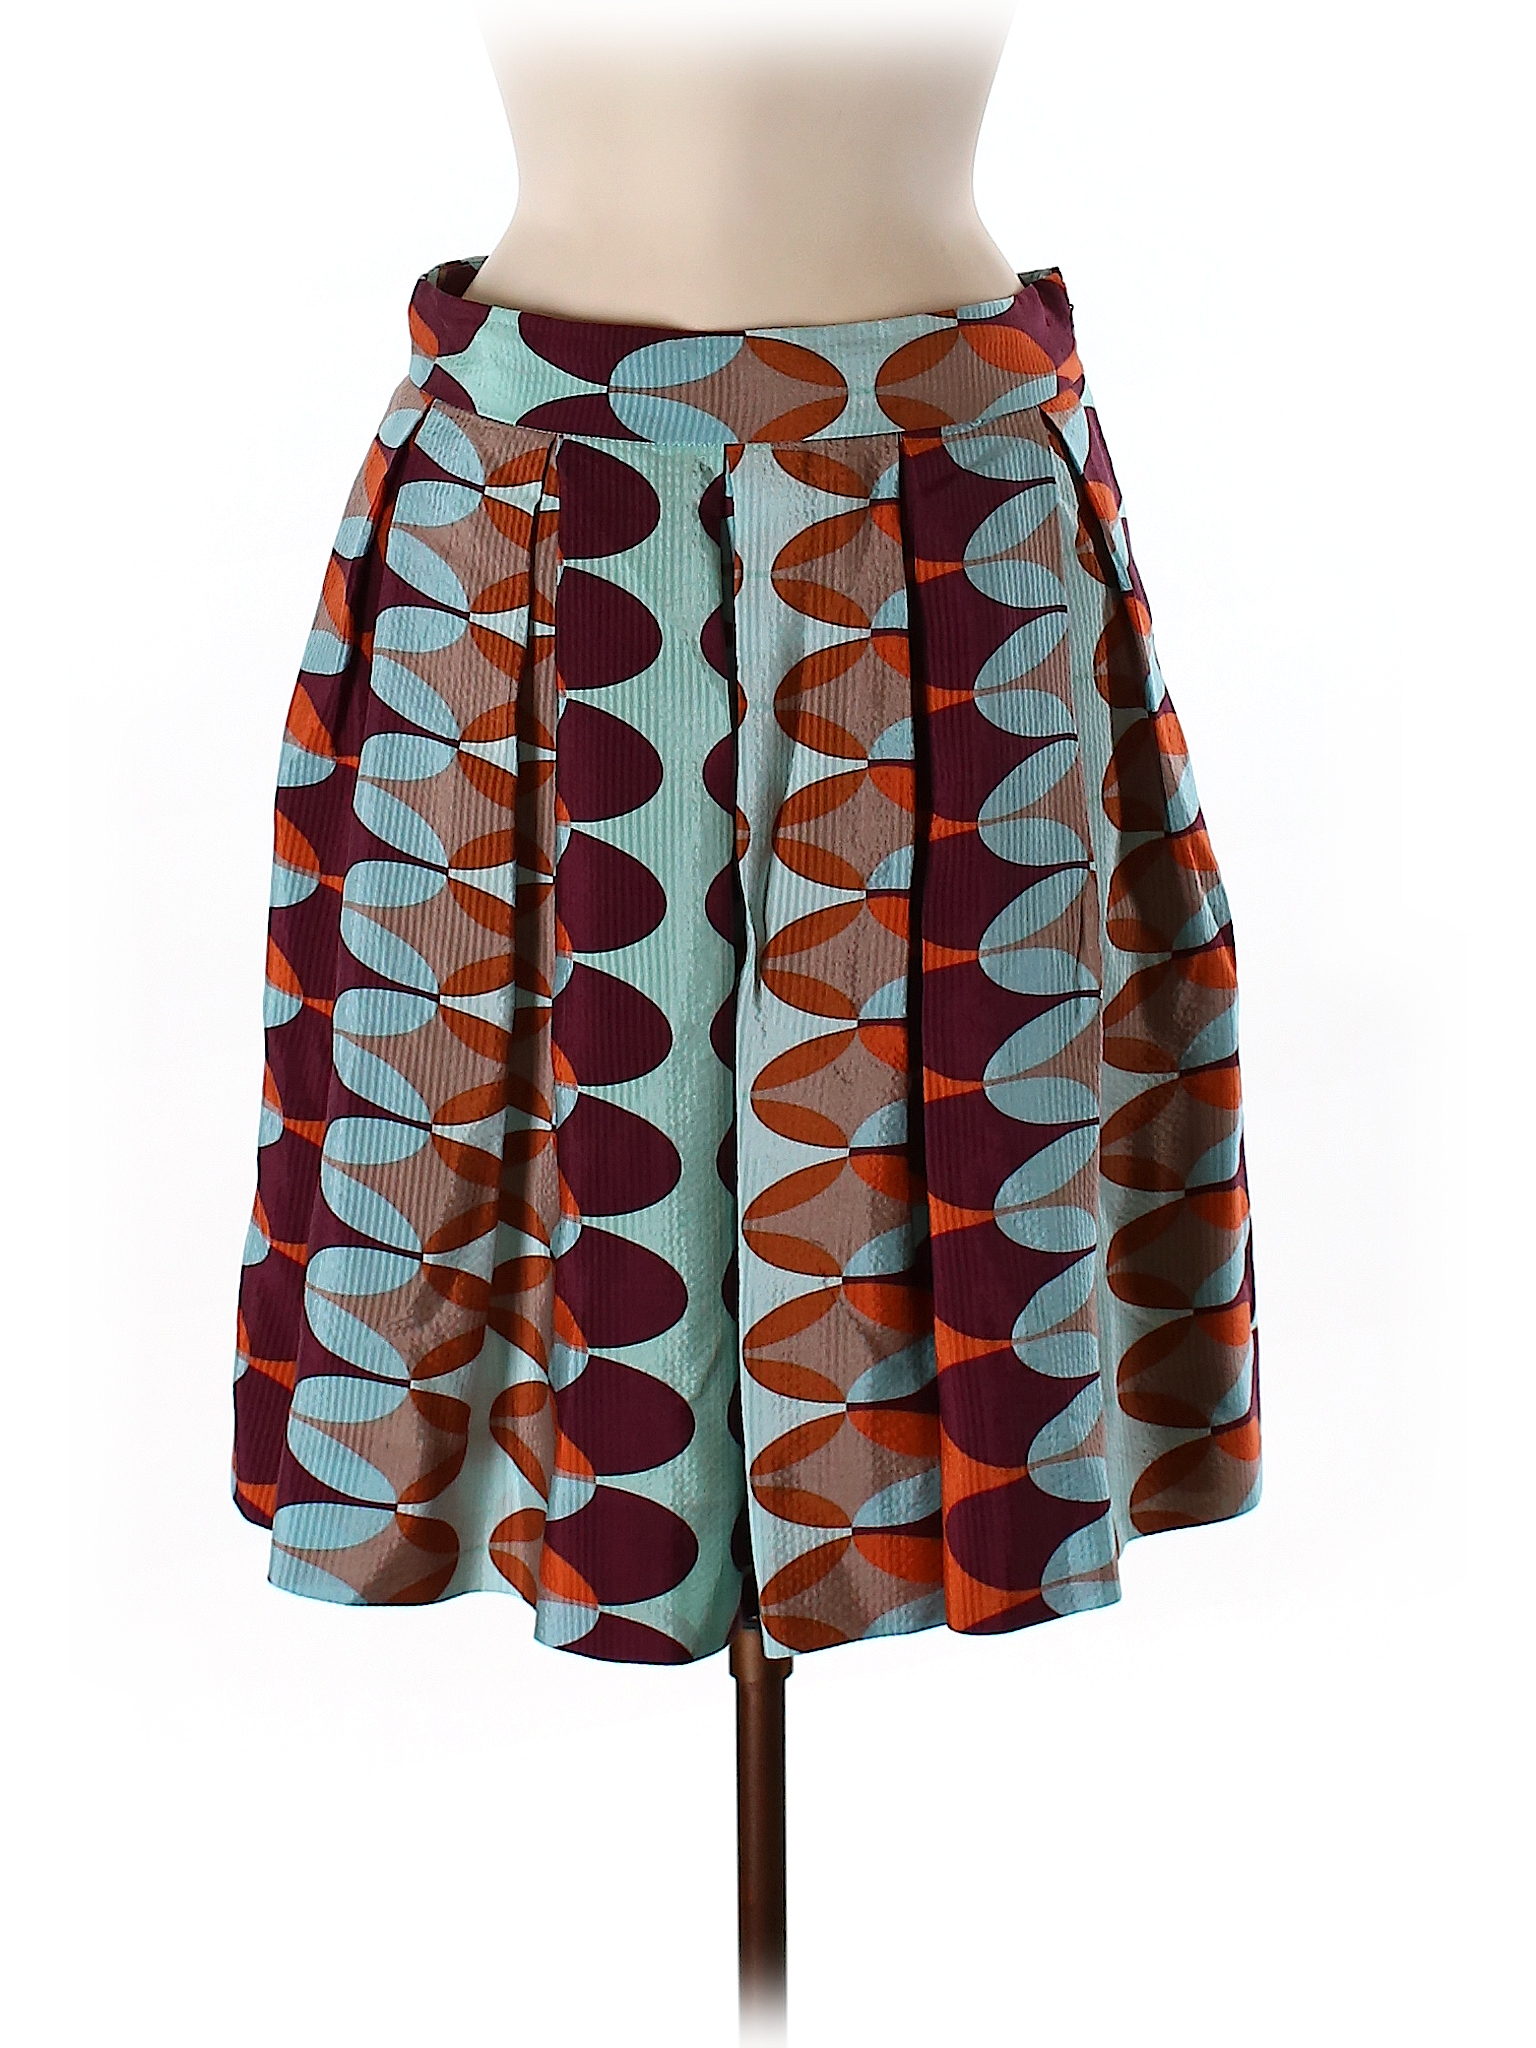 HD in Paris Print Light Blue Casual Skirt Size 6 - 78% off | thredUP